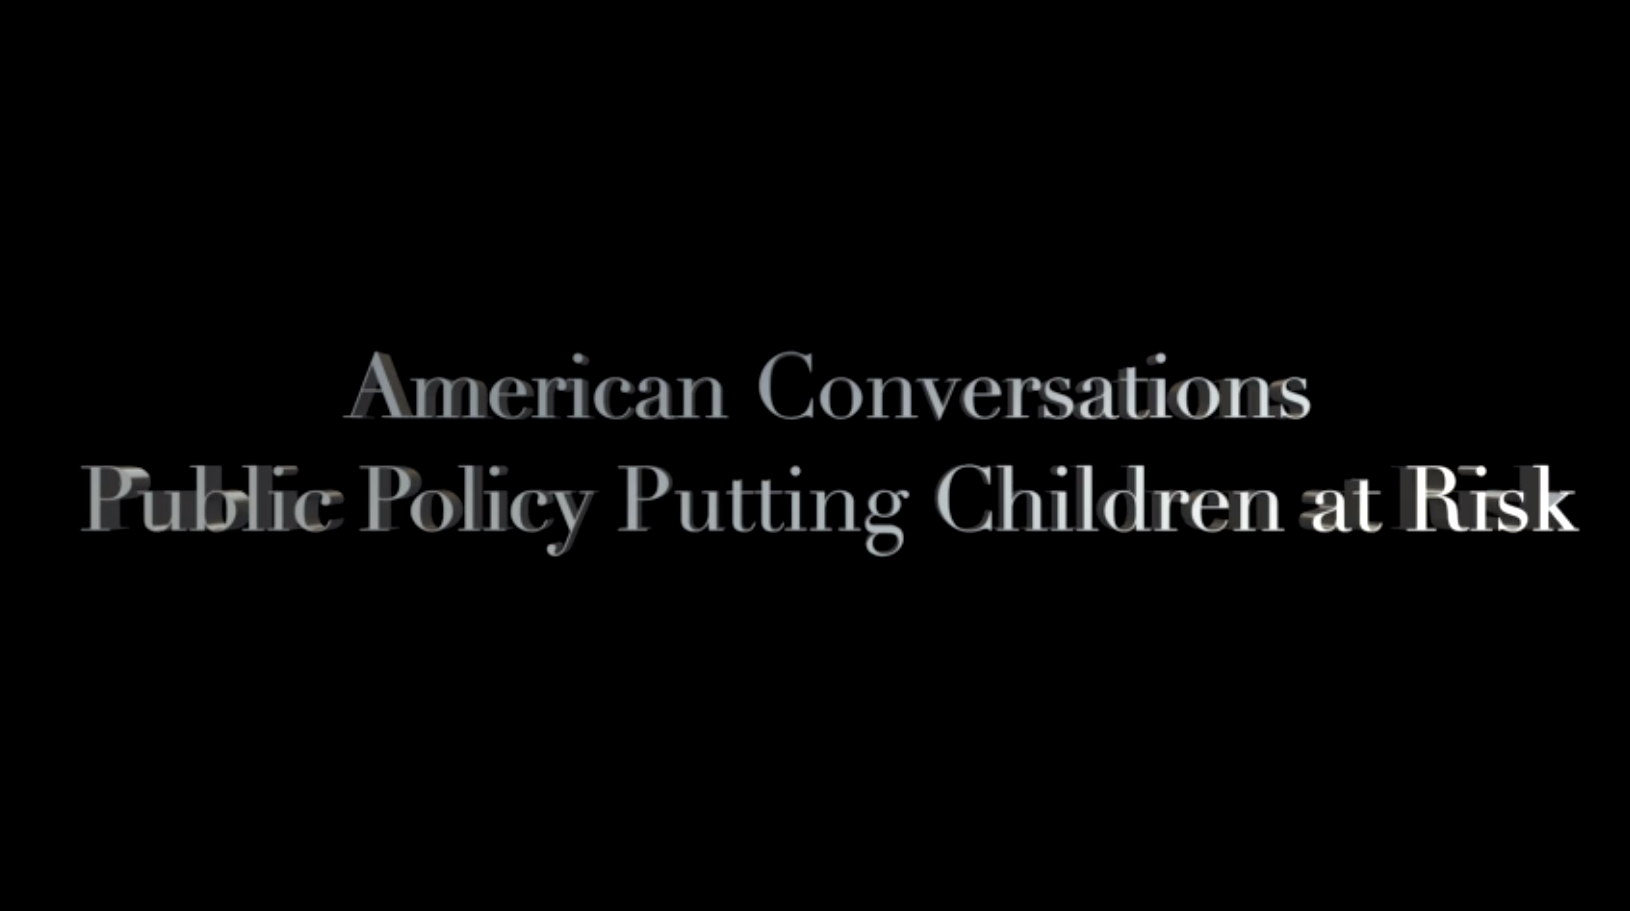 VIDEO: Westport 'American Conversations' Event Nov 1